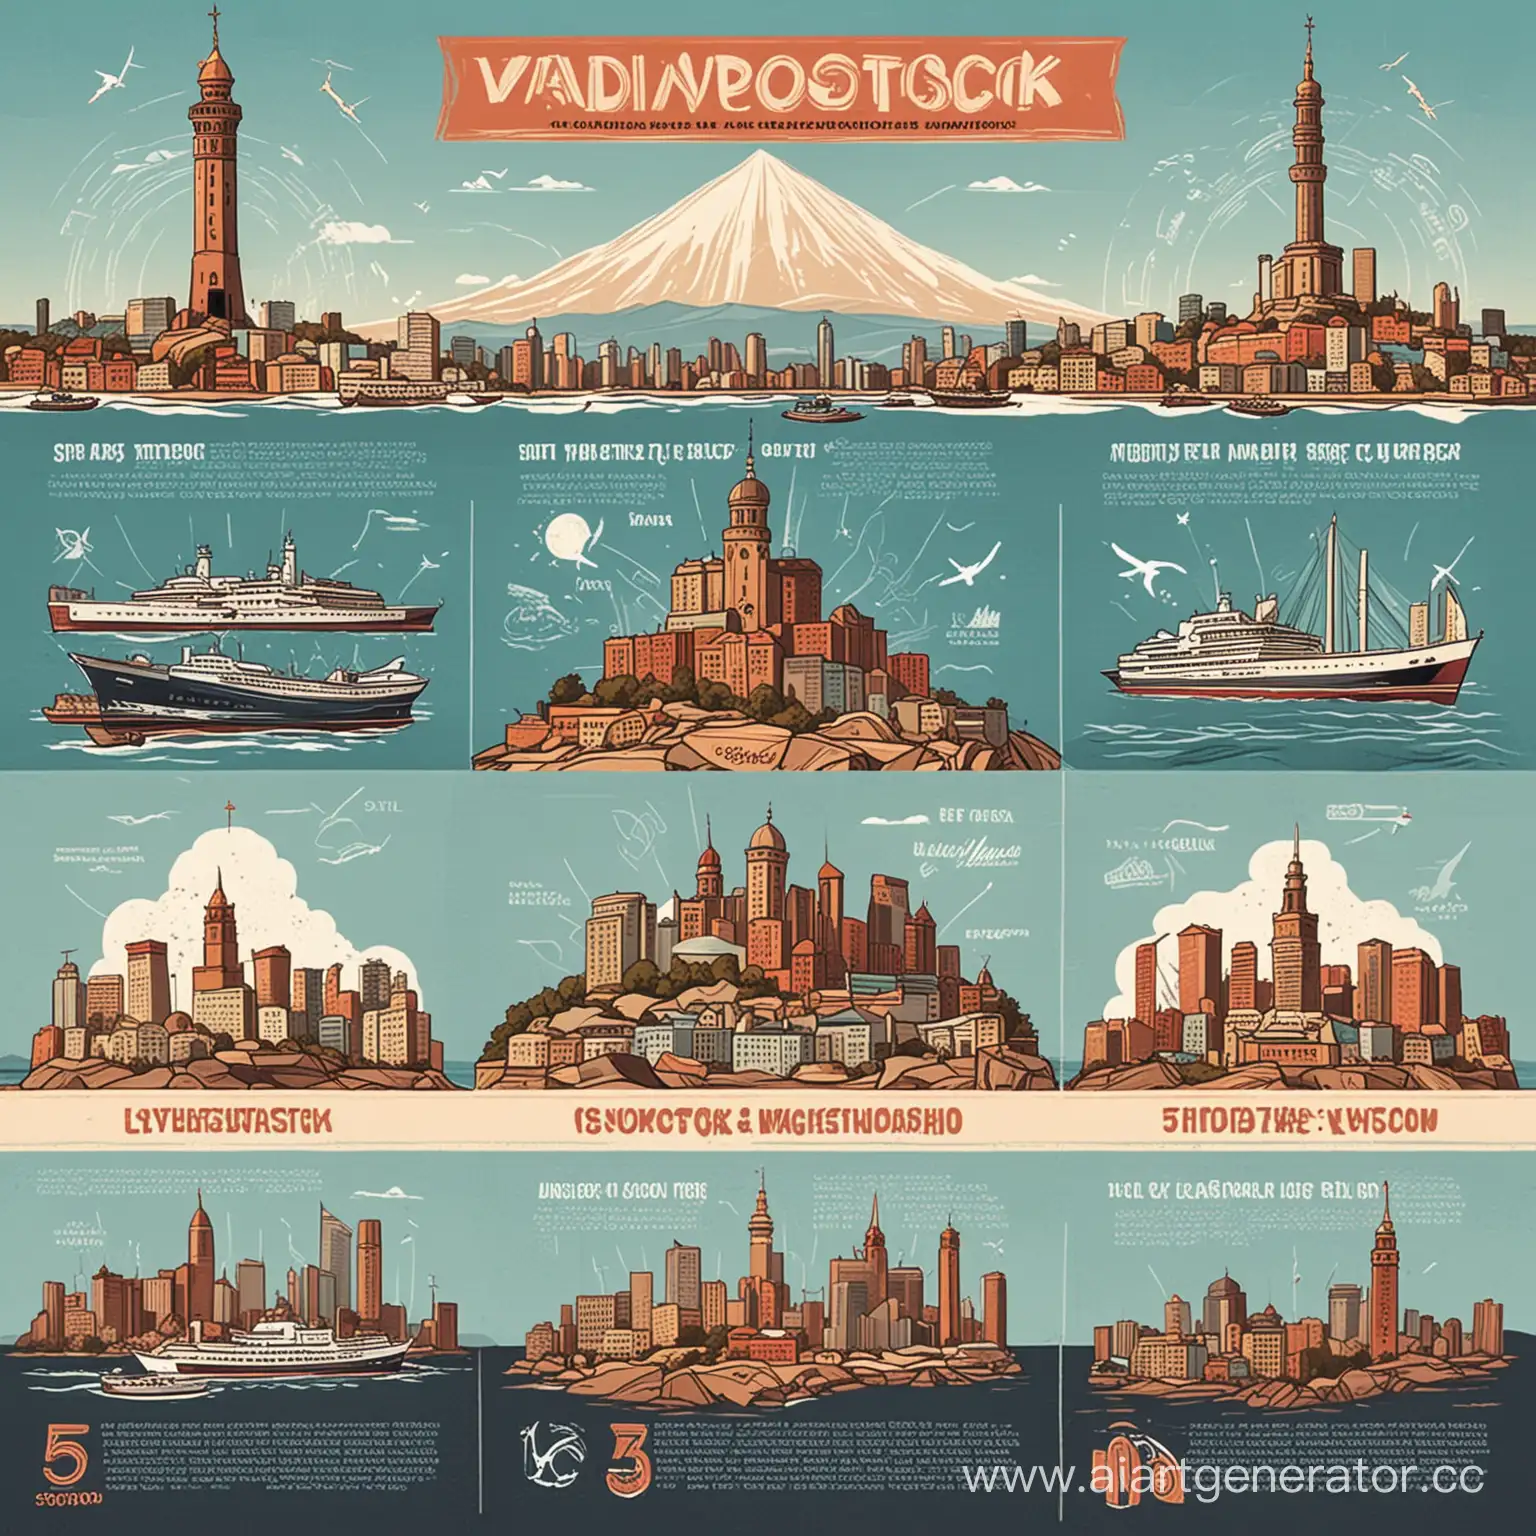 Vladivostok-Landmarks-Infographic-Comicstyle-Illustration-Featuring-Iconic-City-Landmarks